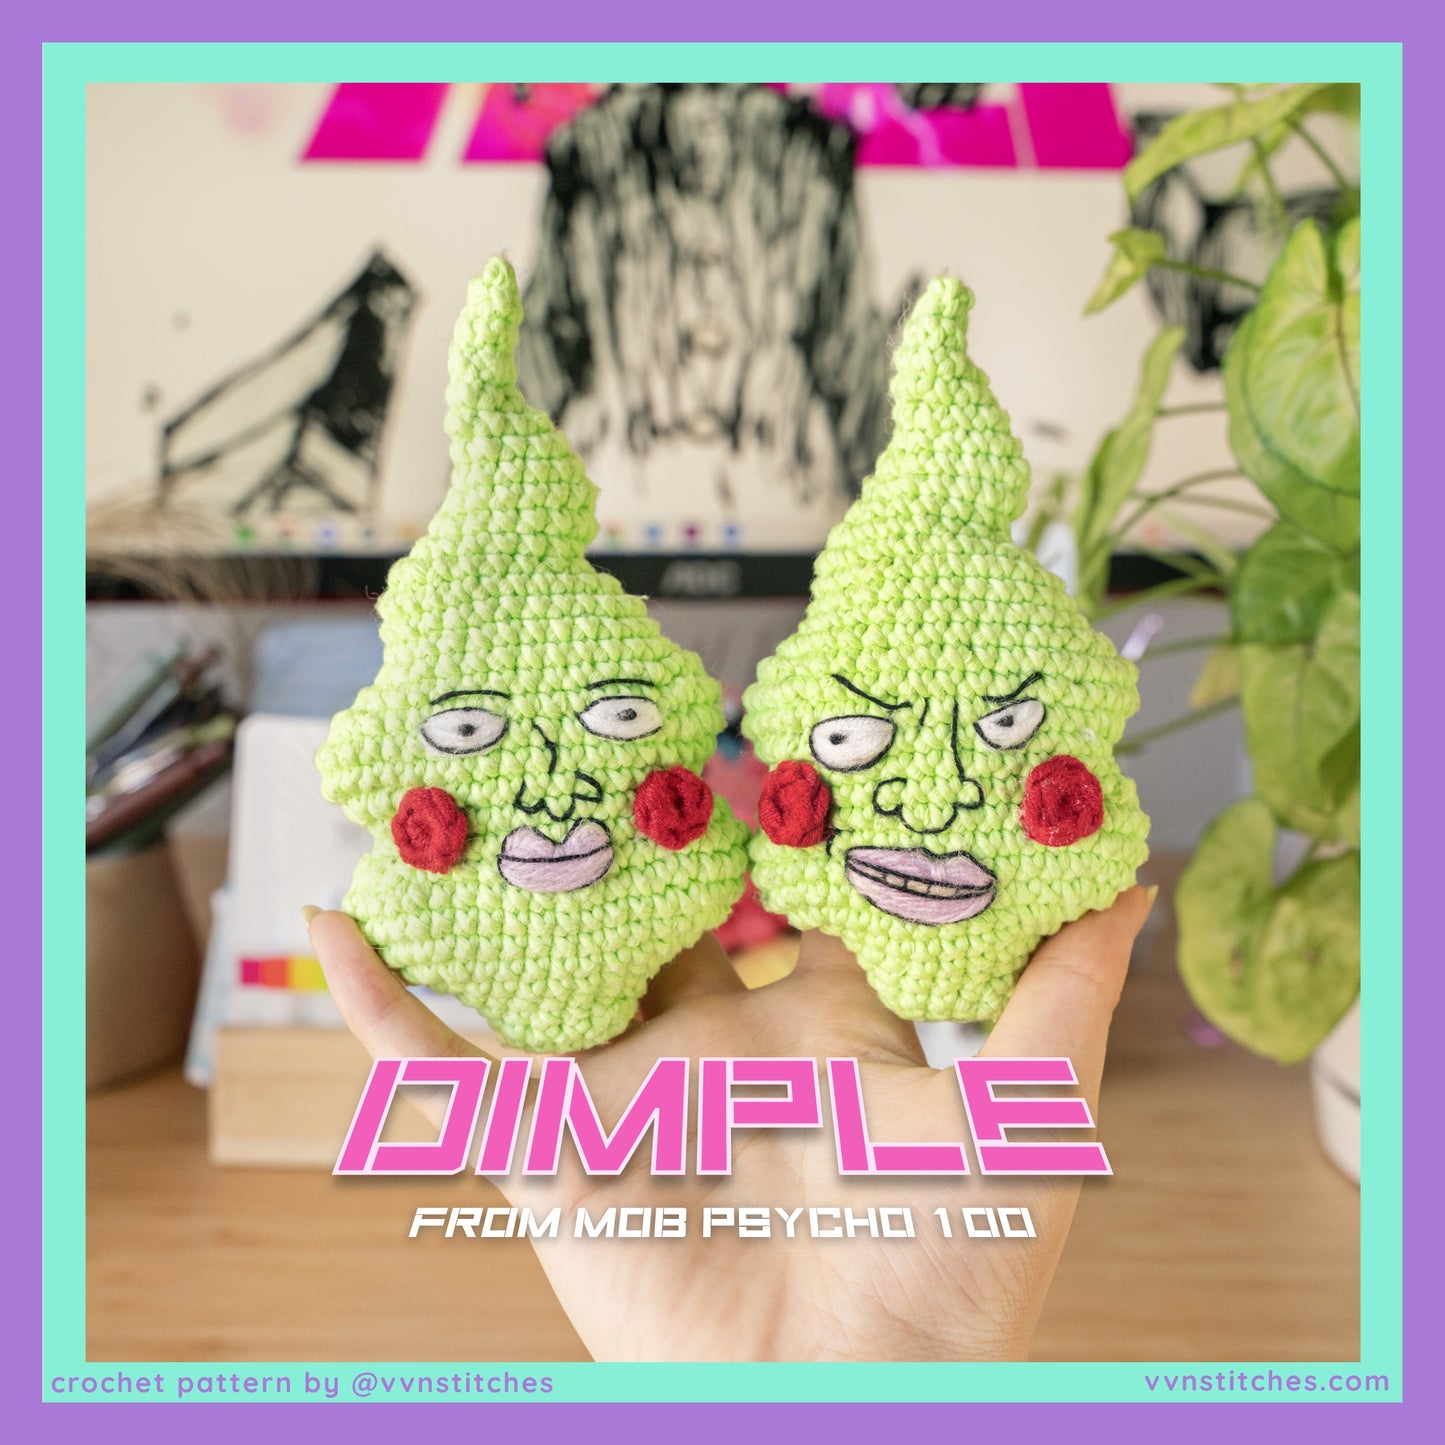 dimple mob psycho 100 crochet pattern amigurumi plush anime merch fanart ekubo